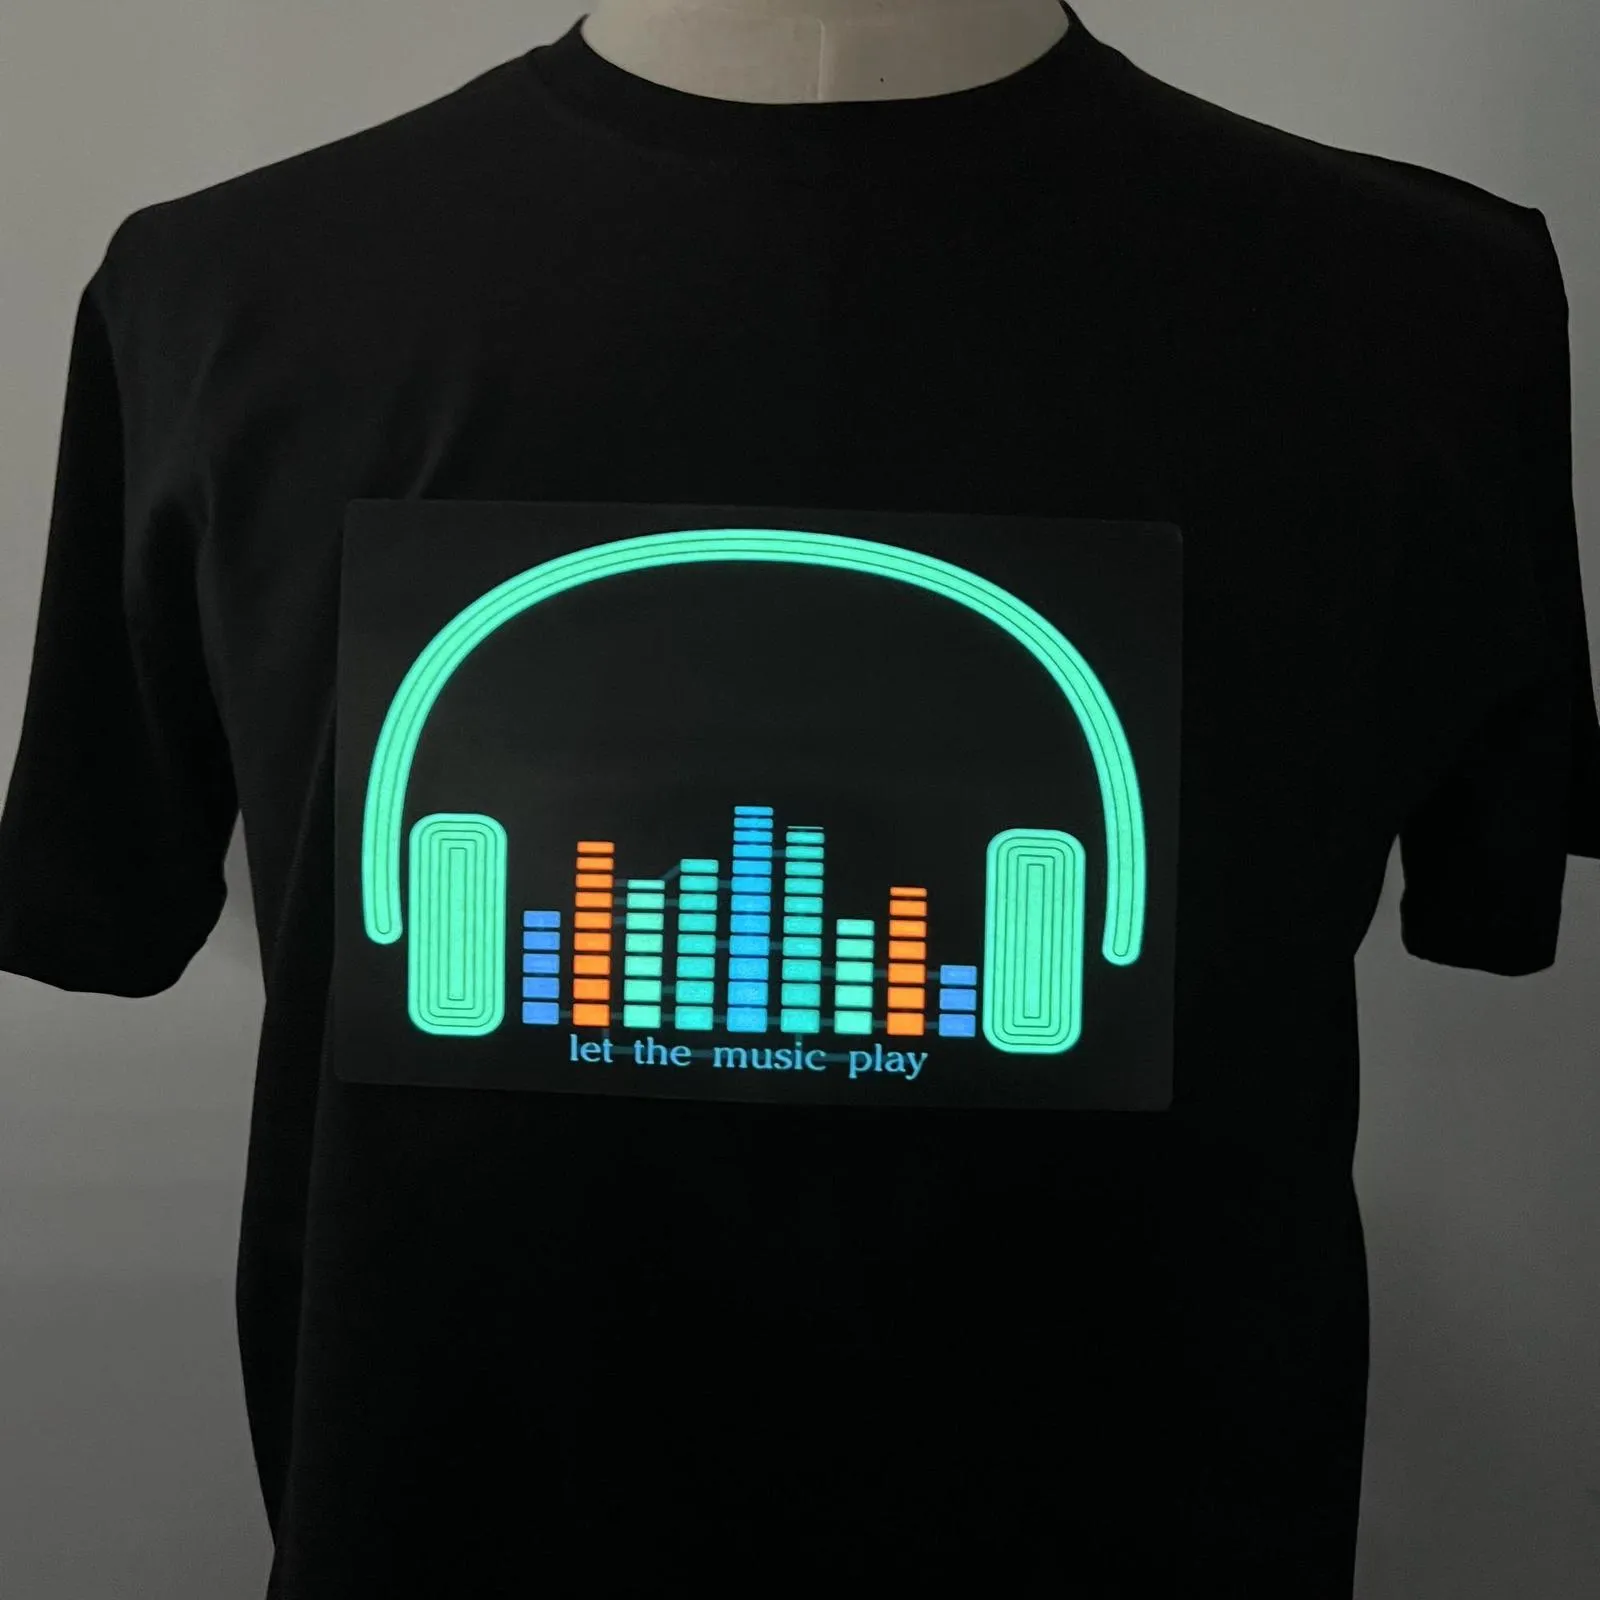 Mens Tshirts Christmas Party DJ Evalizer Display Luminous Music Light Up светительная светодиодная футболка 230403